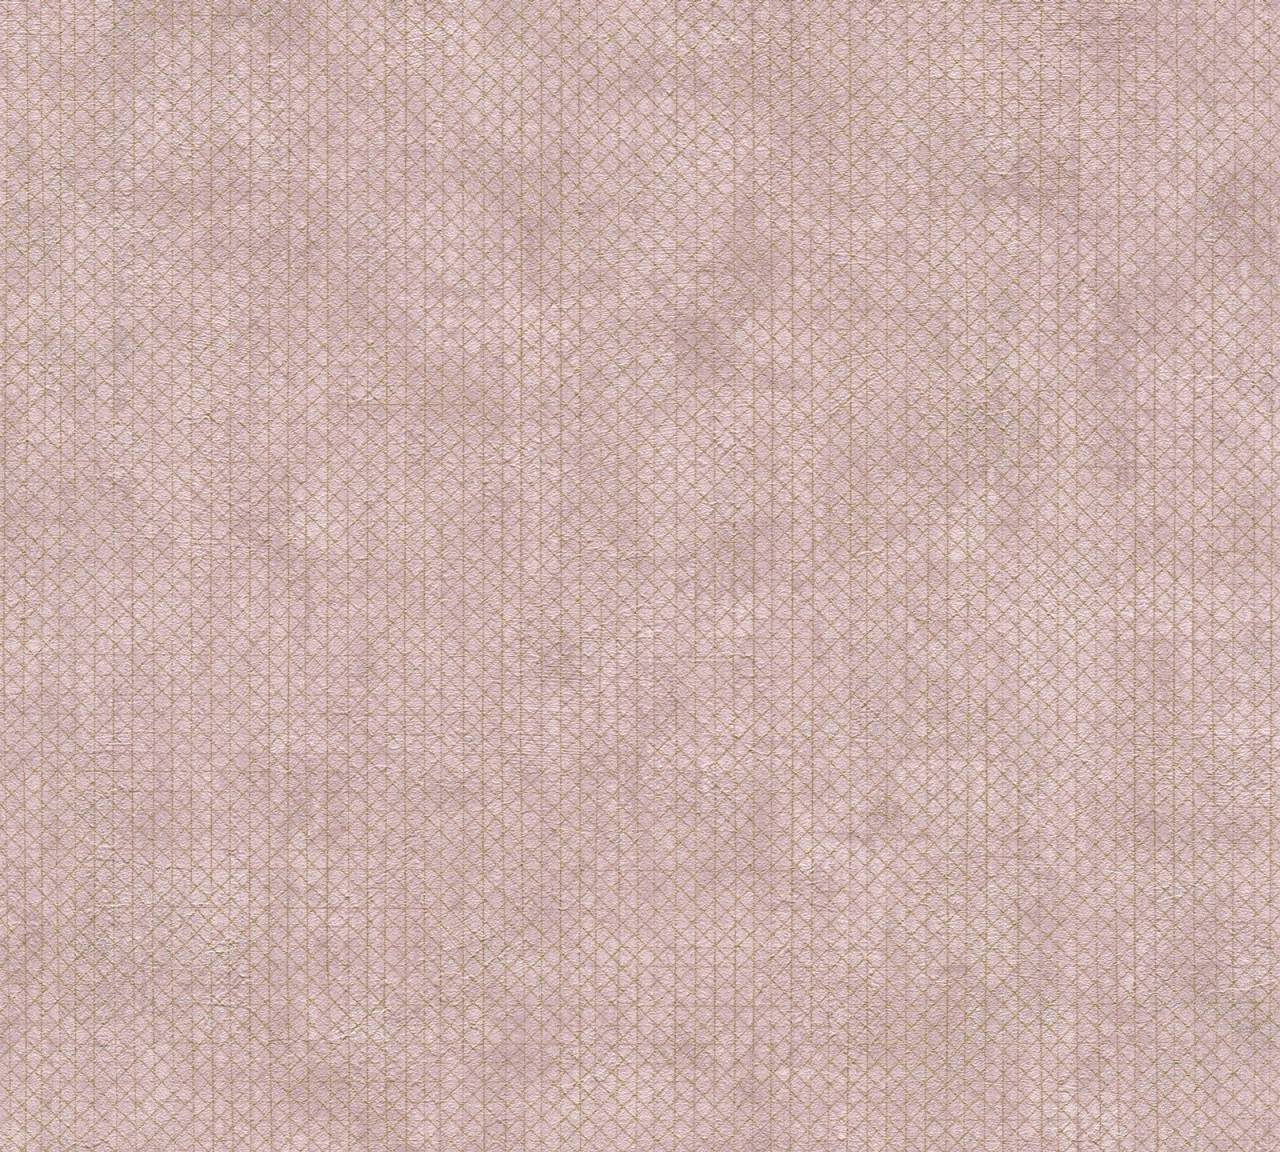 As fleece wallpaper the bos rosa unitapete 388263